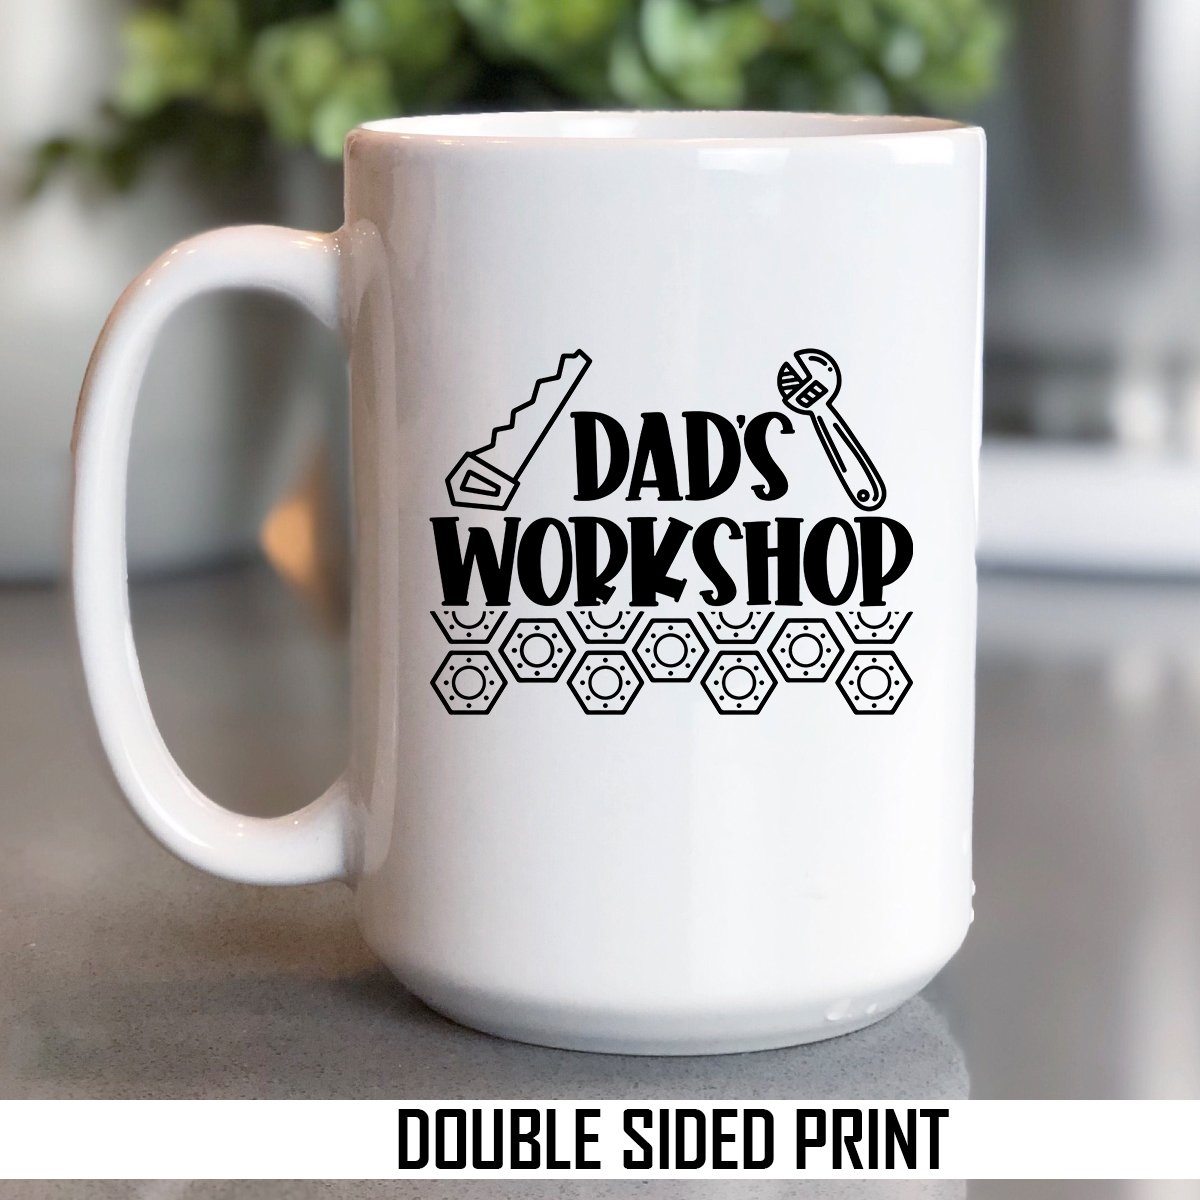 Dad's Workshop Double Sided Printed Mug